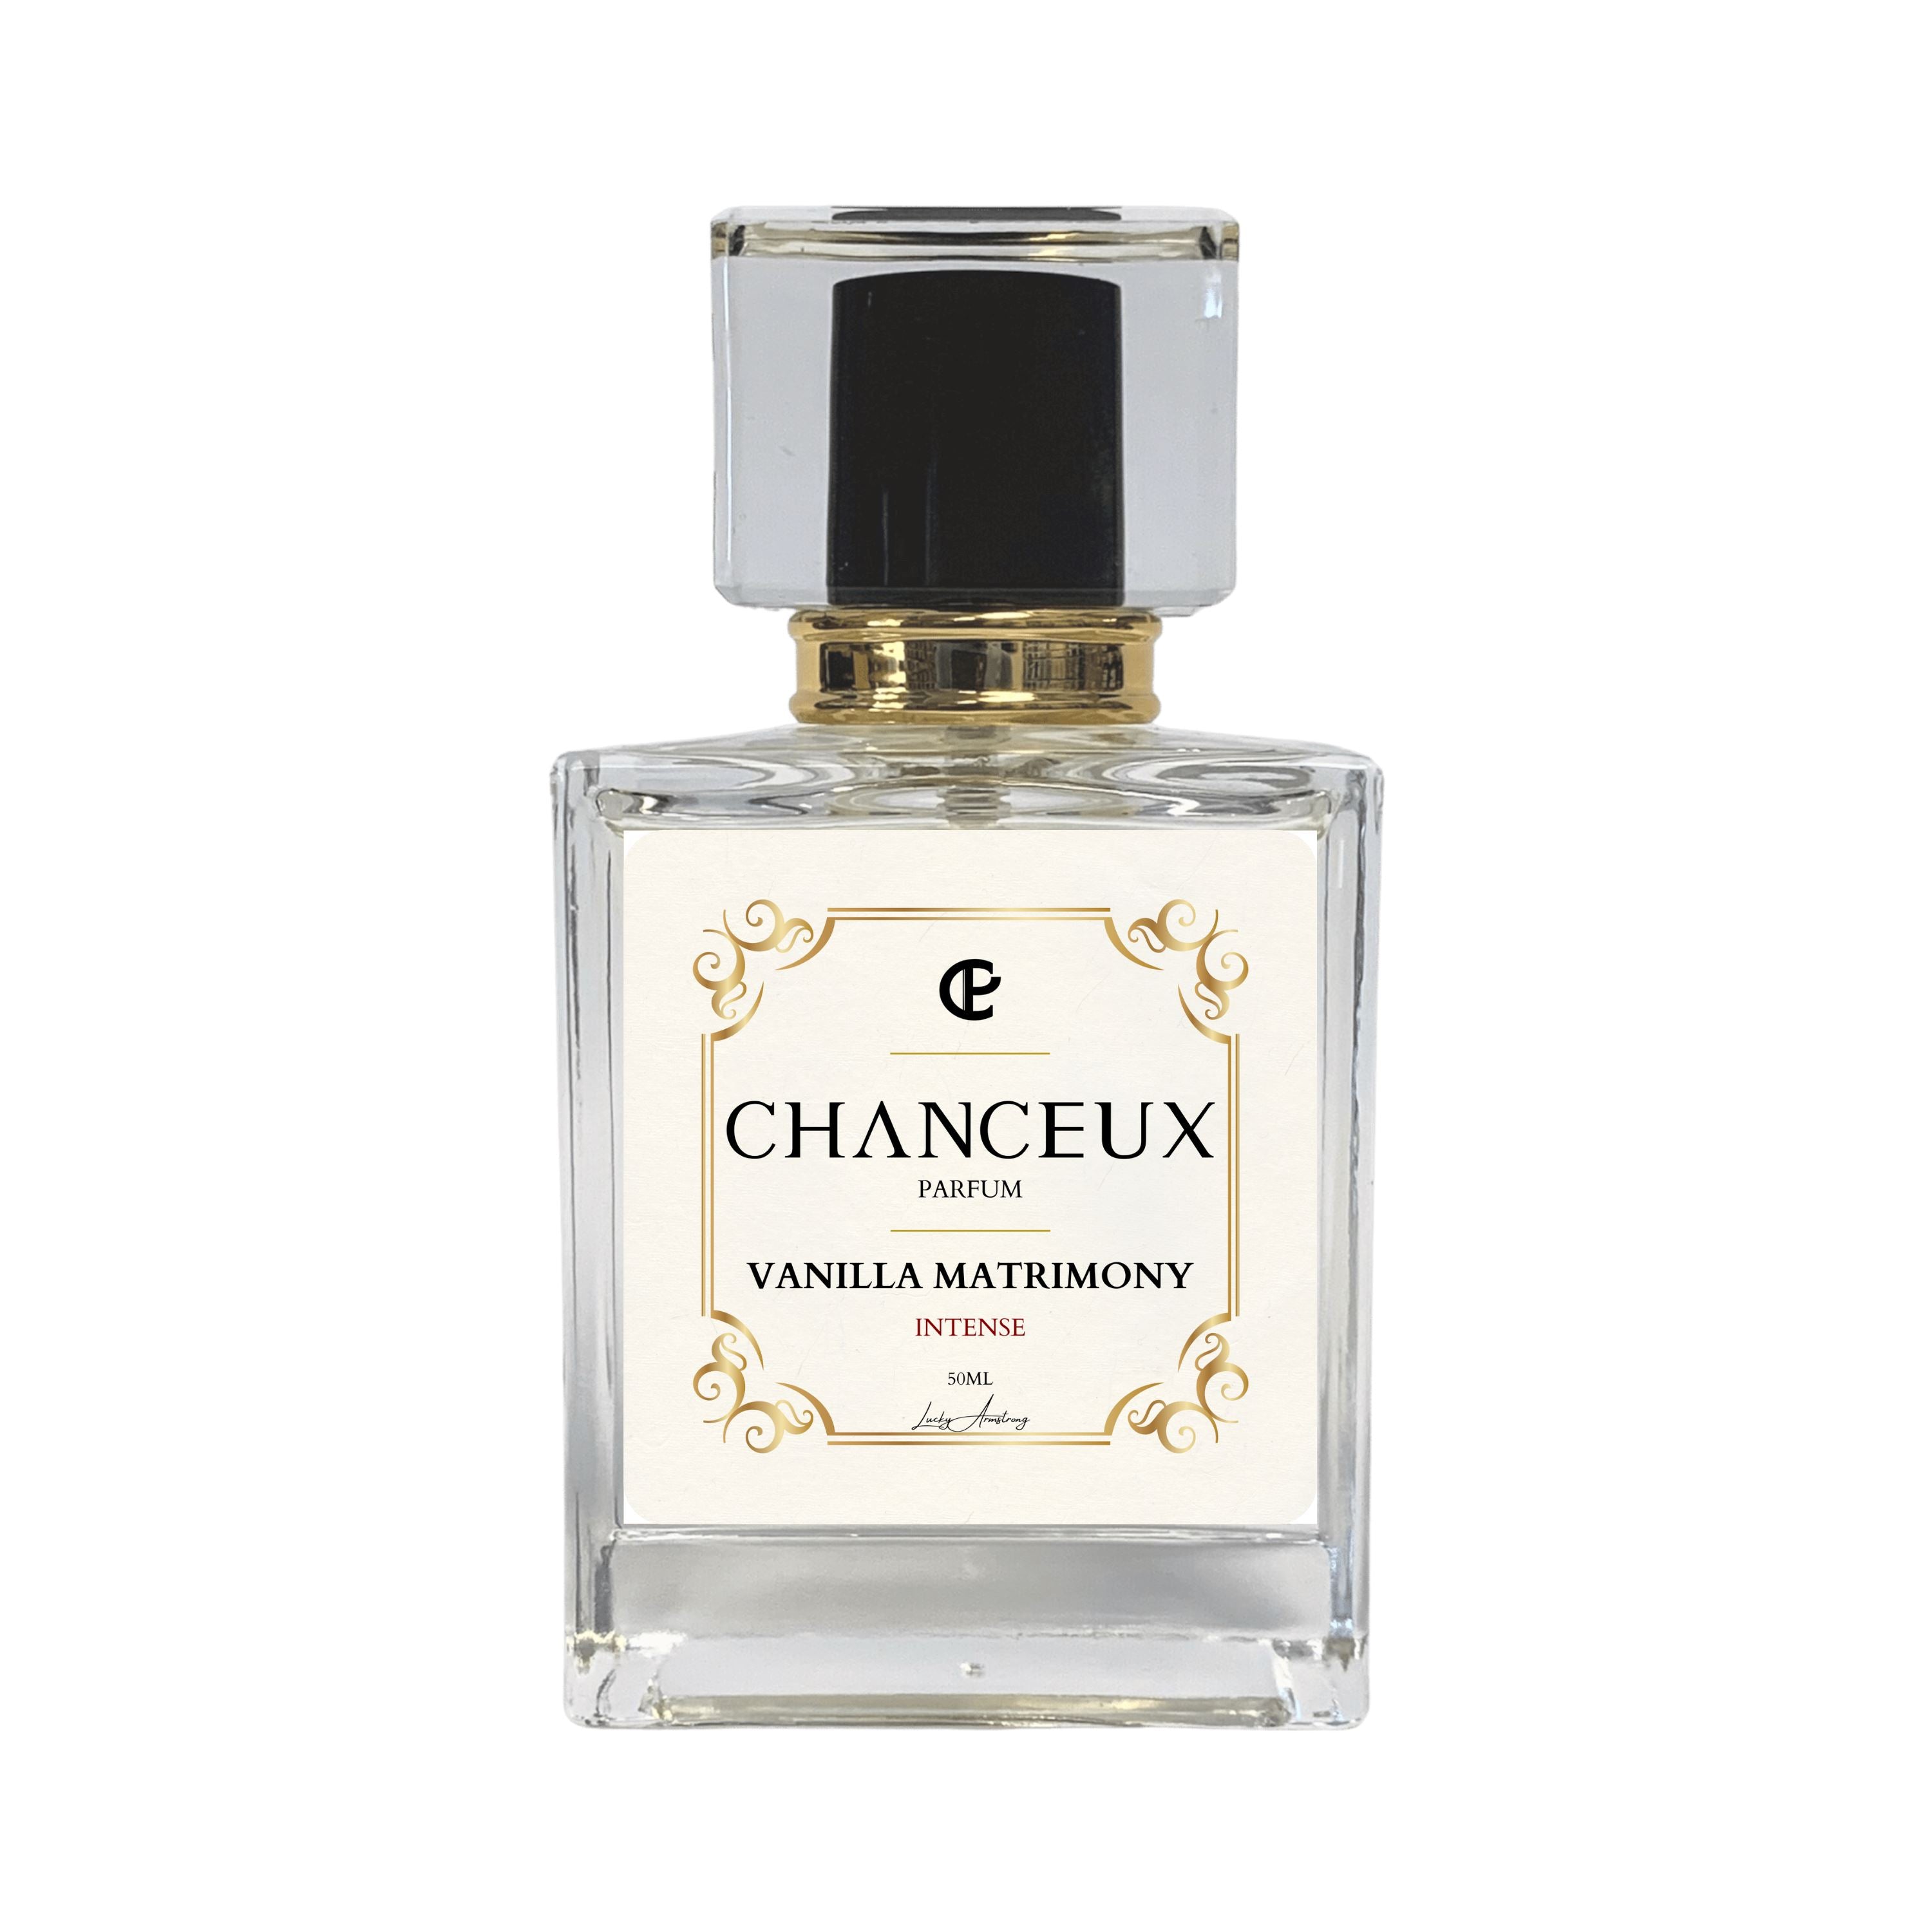 VANILLA MATRIMONY INTENSE Perfume & Cologne Chanceux Parfum 